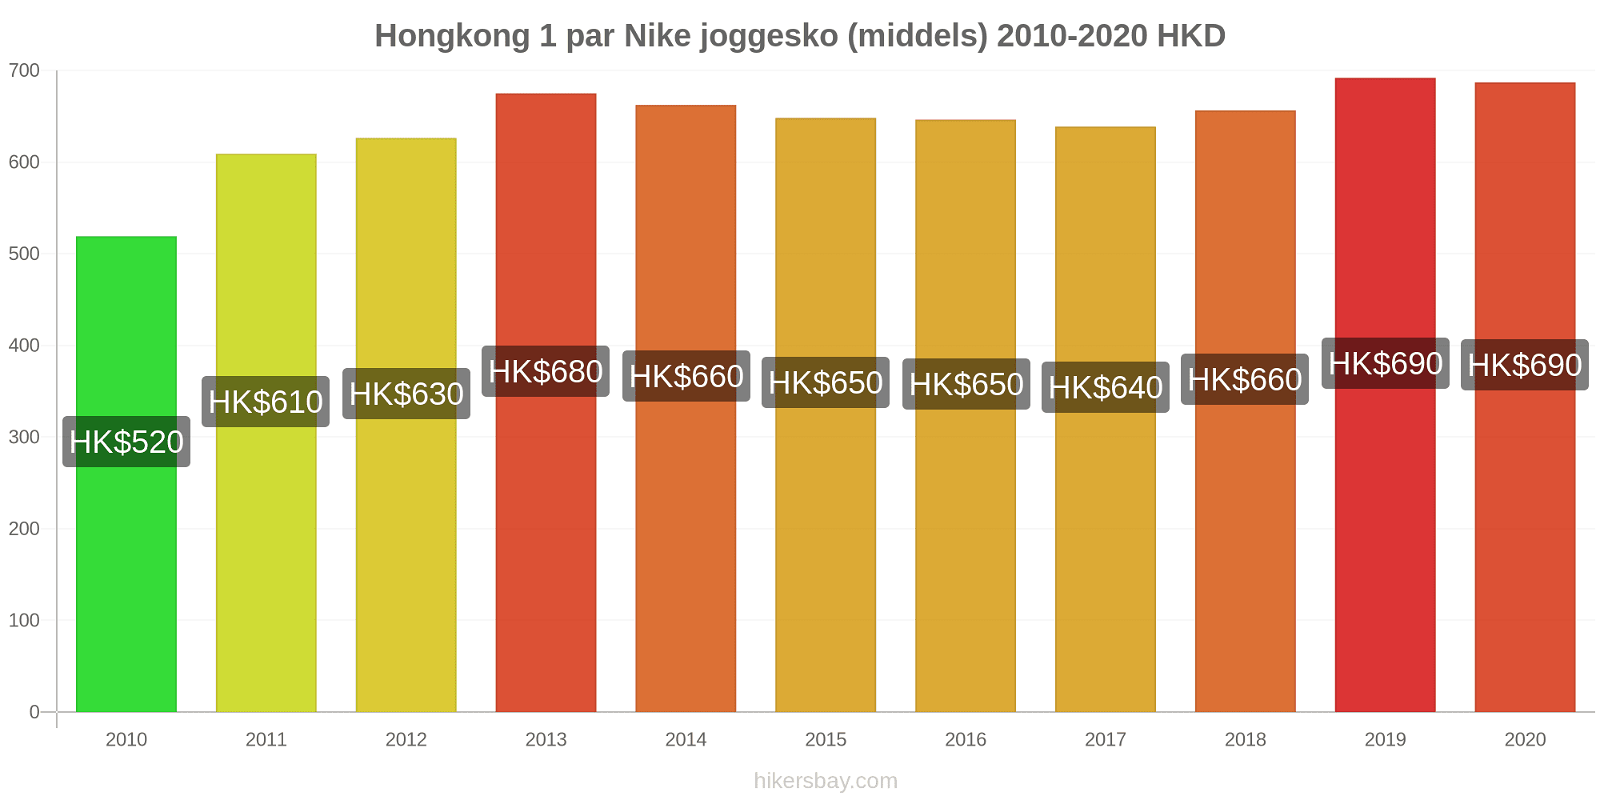 Hongkong prisendringer 1 par Nike joggesko (middels) hikersbay.com